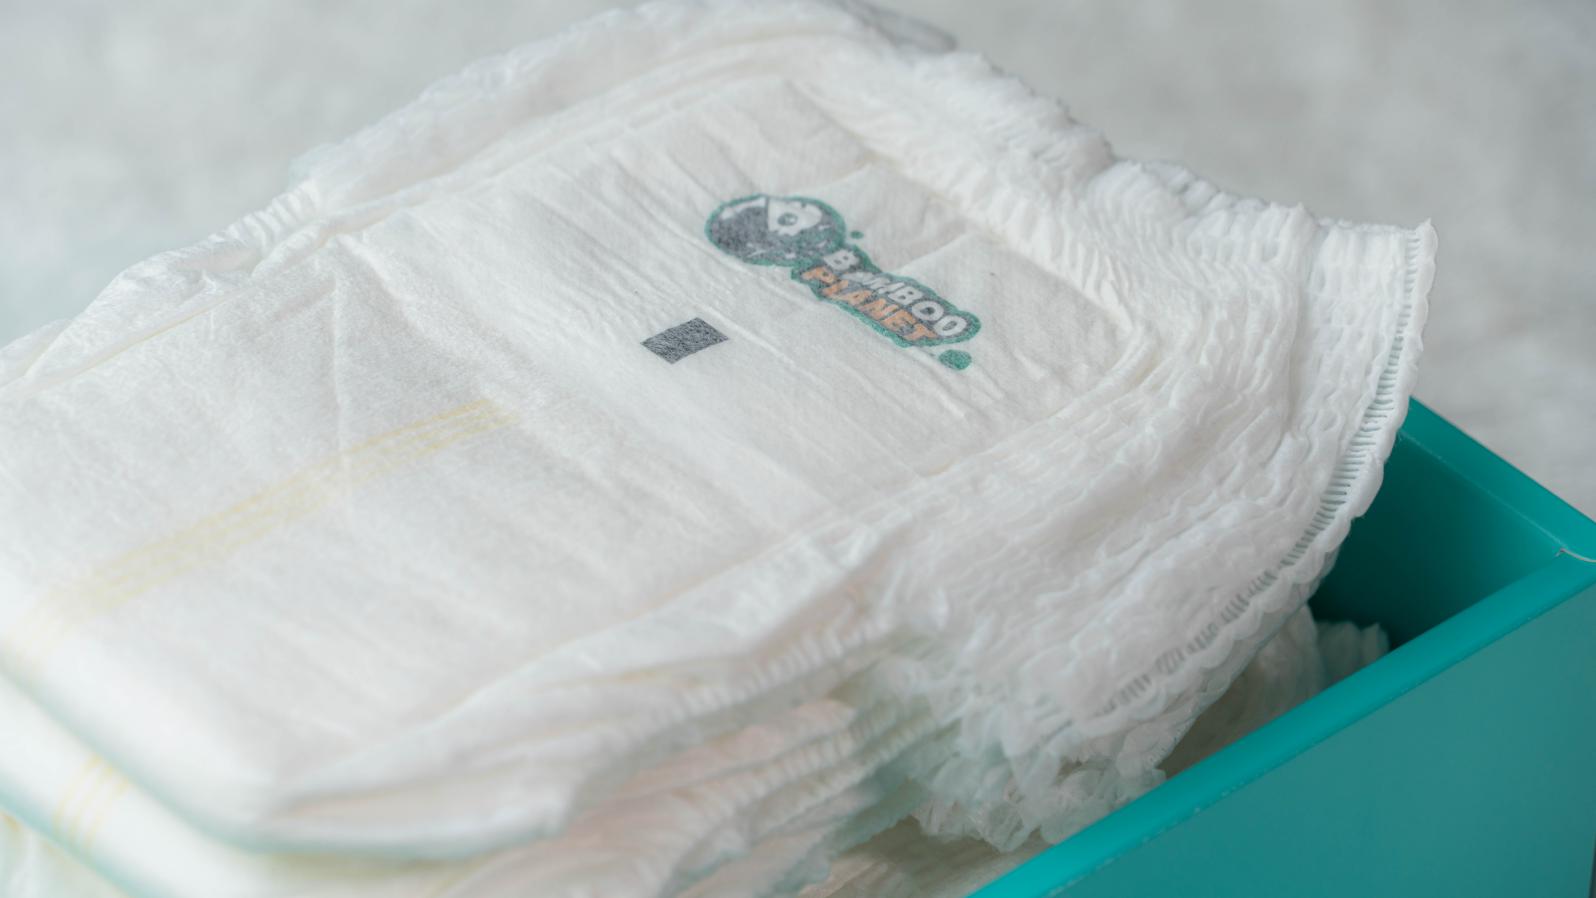 IChina iSibonelelo seGolide saseTshayina Super Soft Ultra Thin Absorbent Core Baby Bamboo Disposable Biodegradable Pull-up diaper